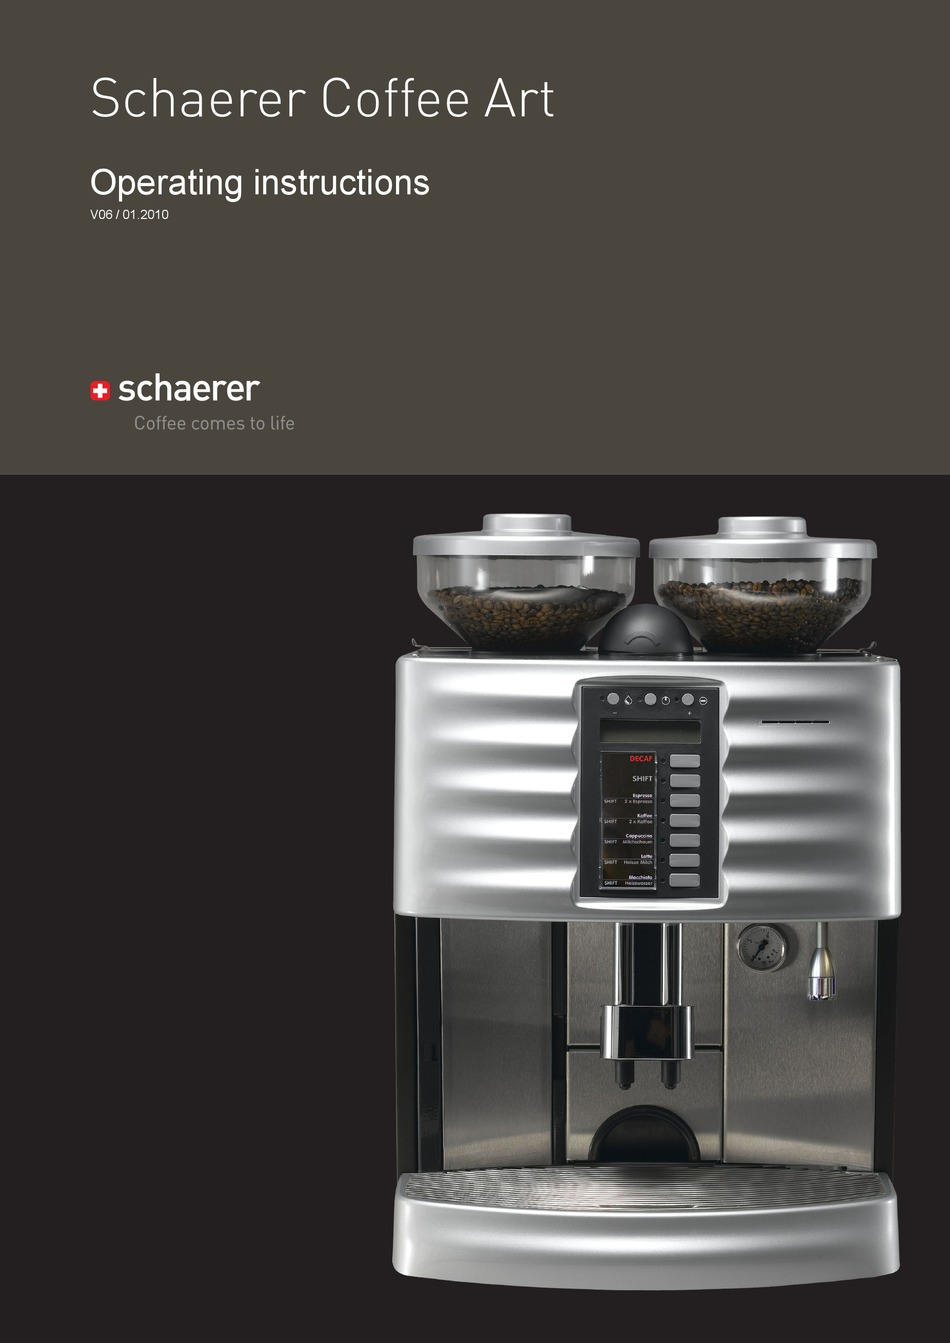 SCHAERER COFFEE ART ORIGINAL OPERATING INSTRUCTIONS Pdf